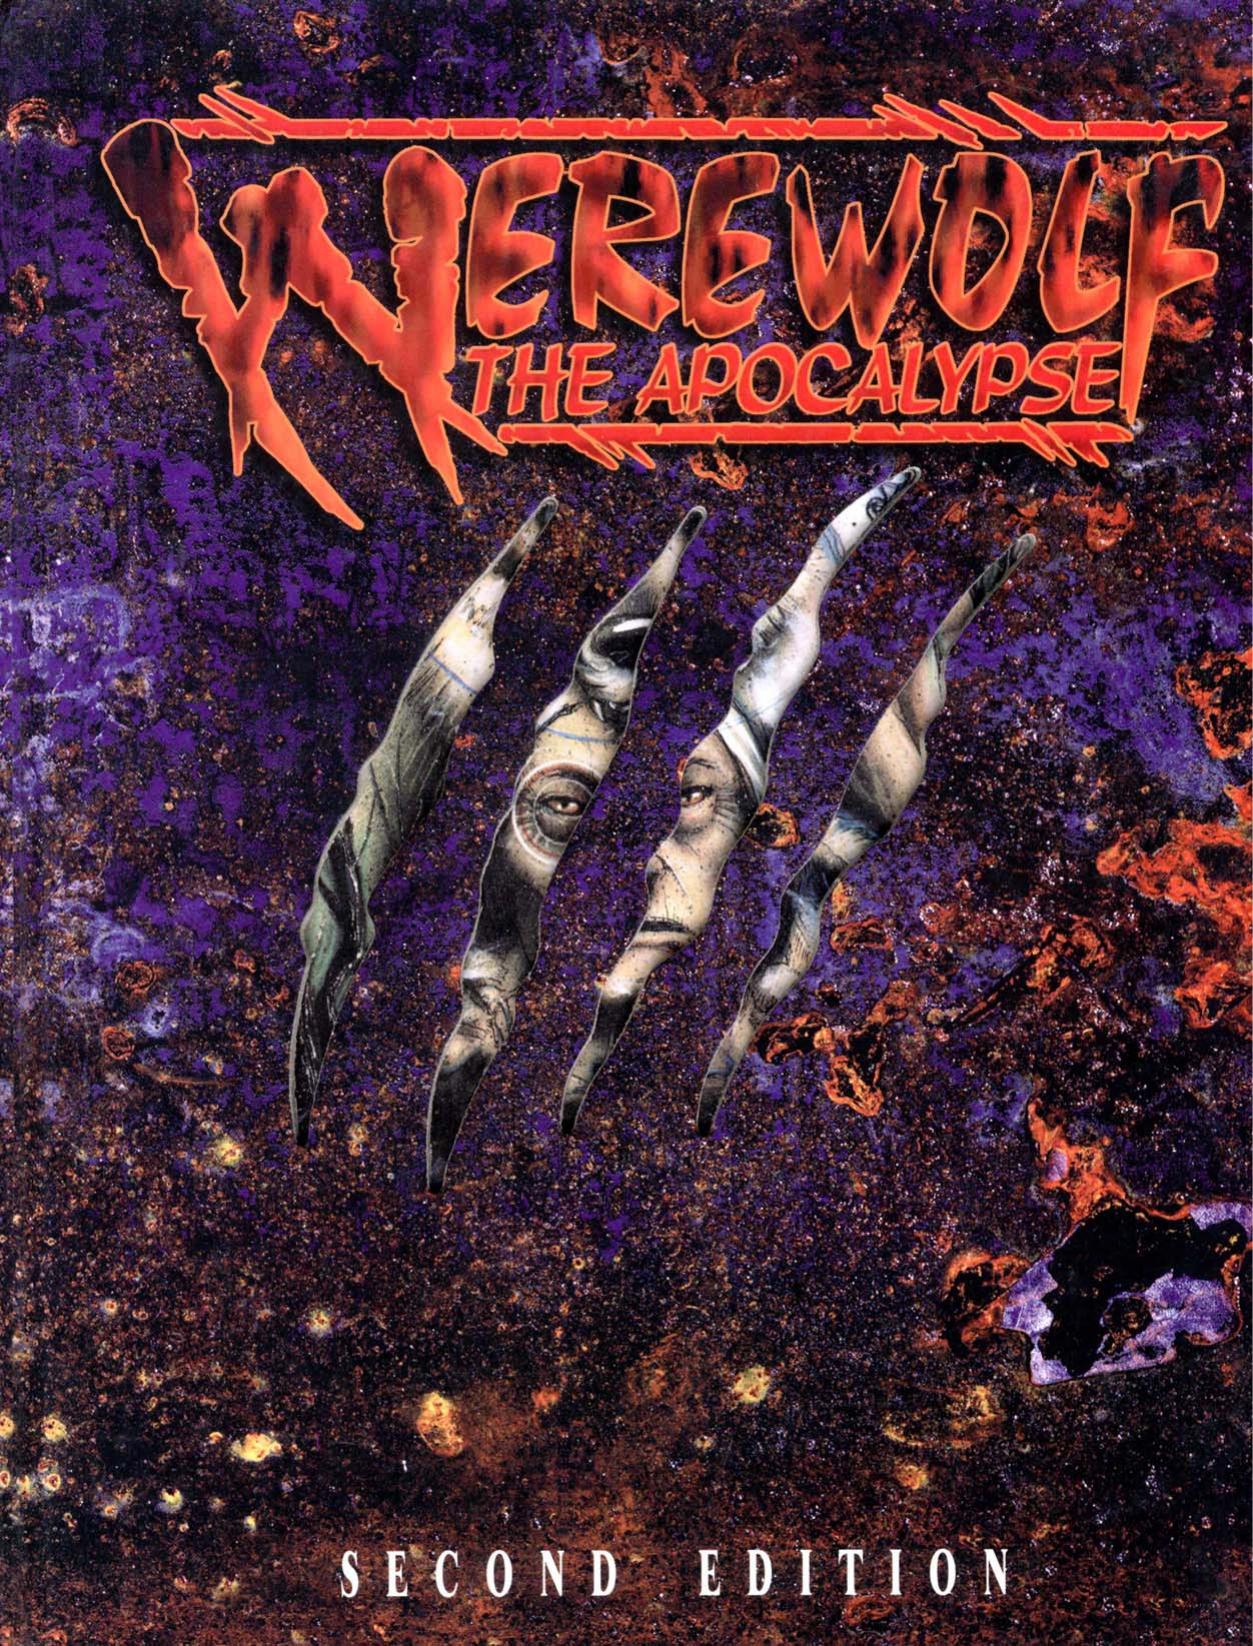 Werewolf The Apocalypse - Core rules (1998).pdf